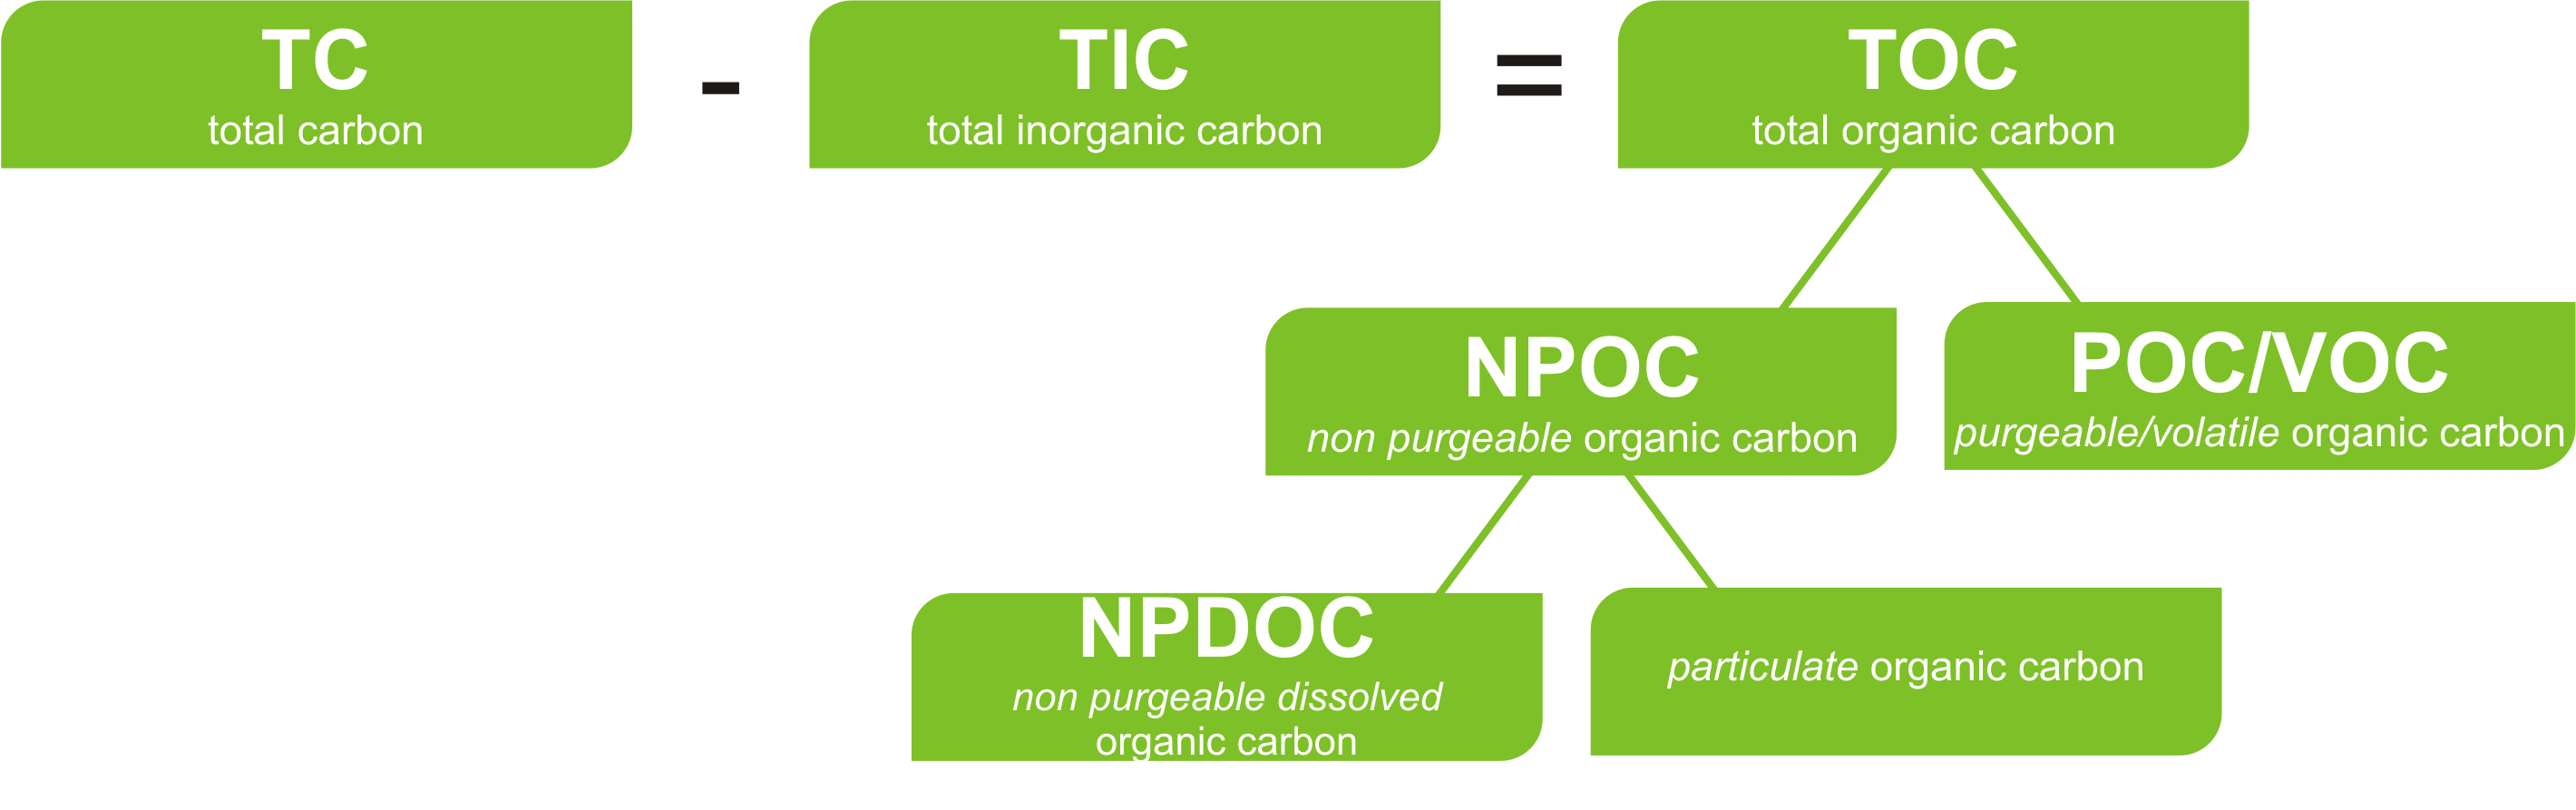 Total Organic Carbon Components